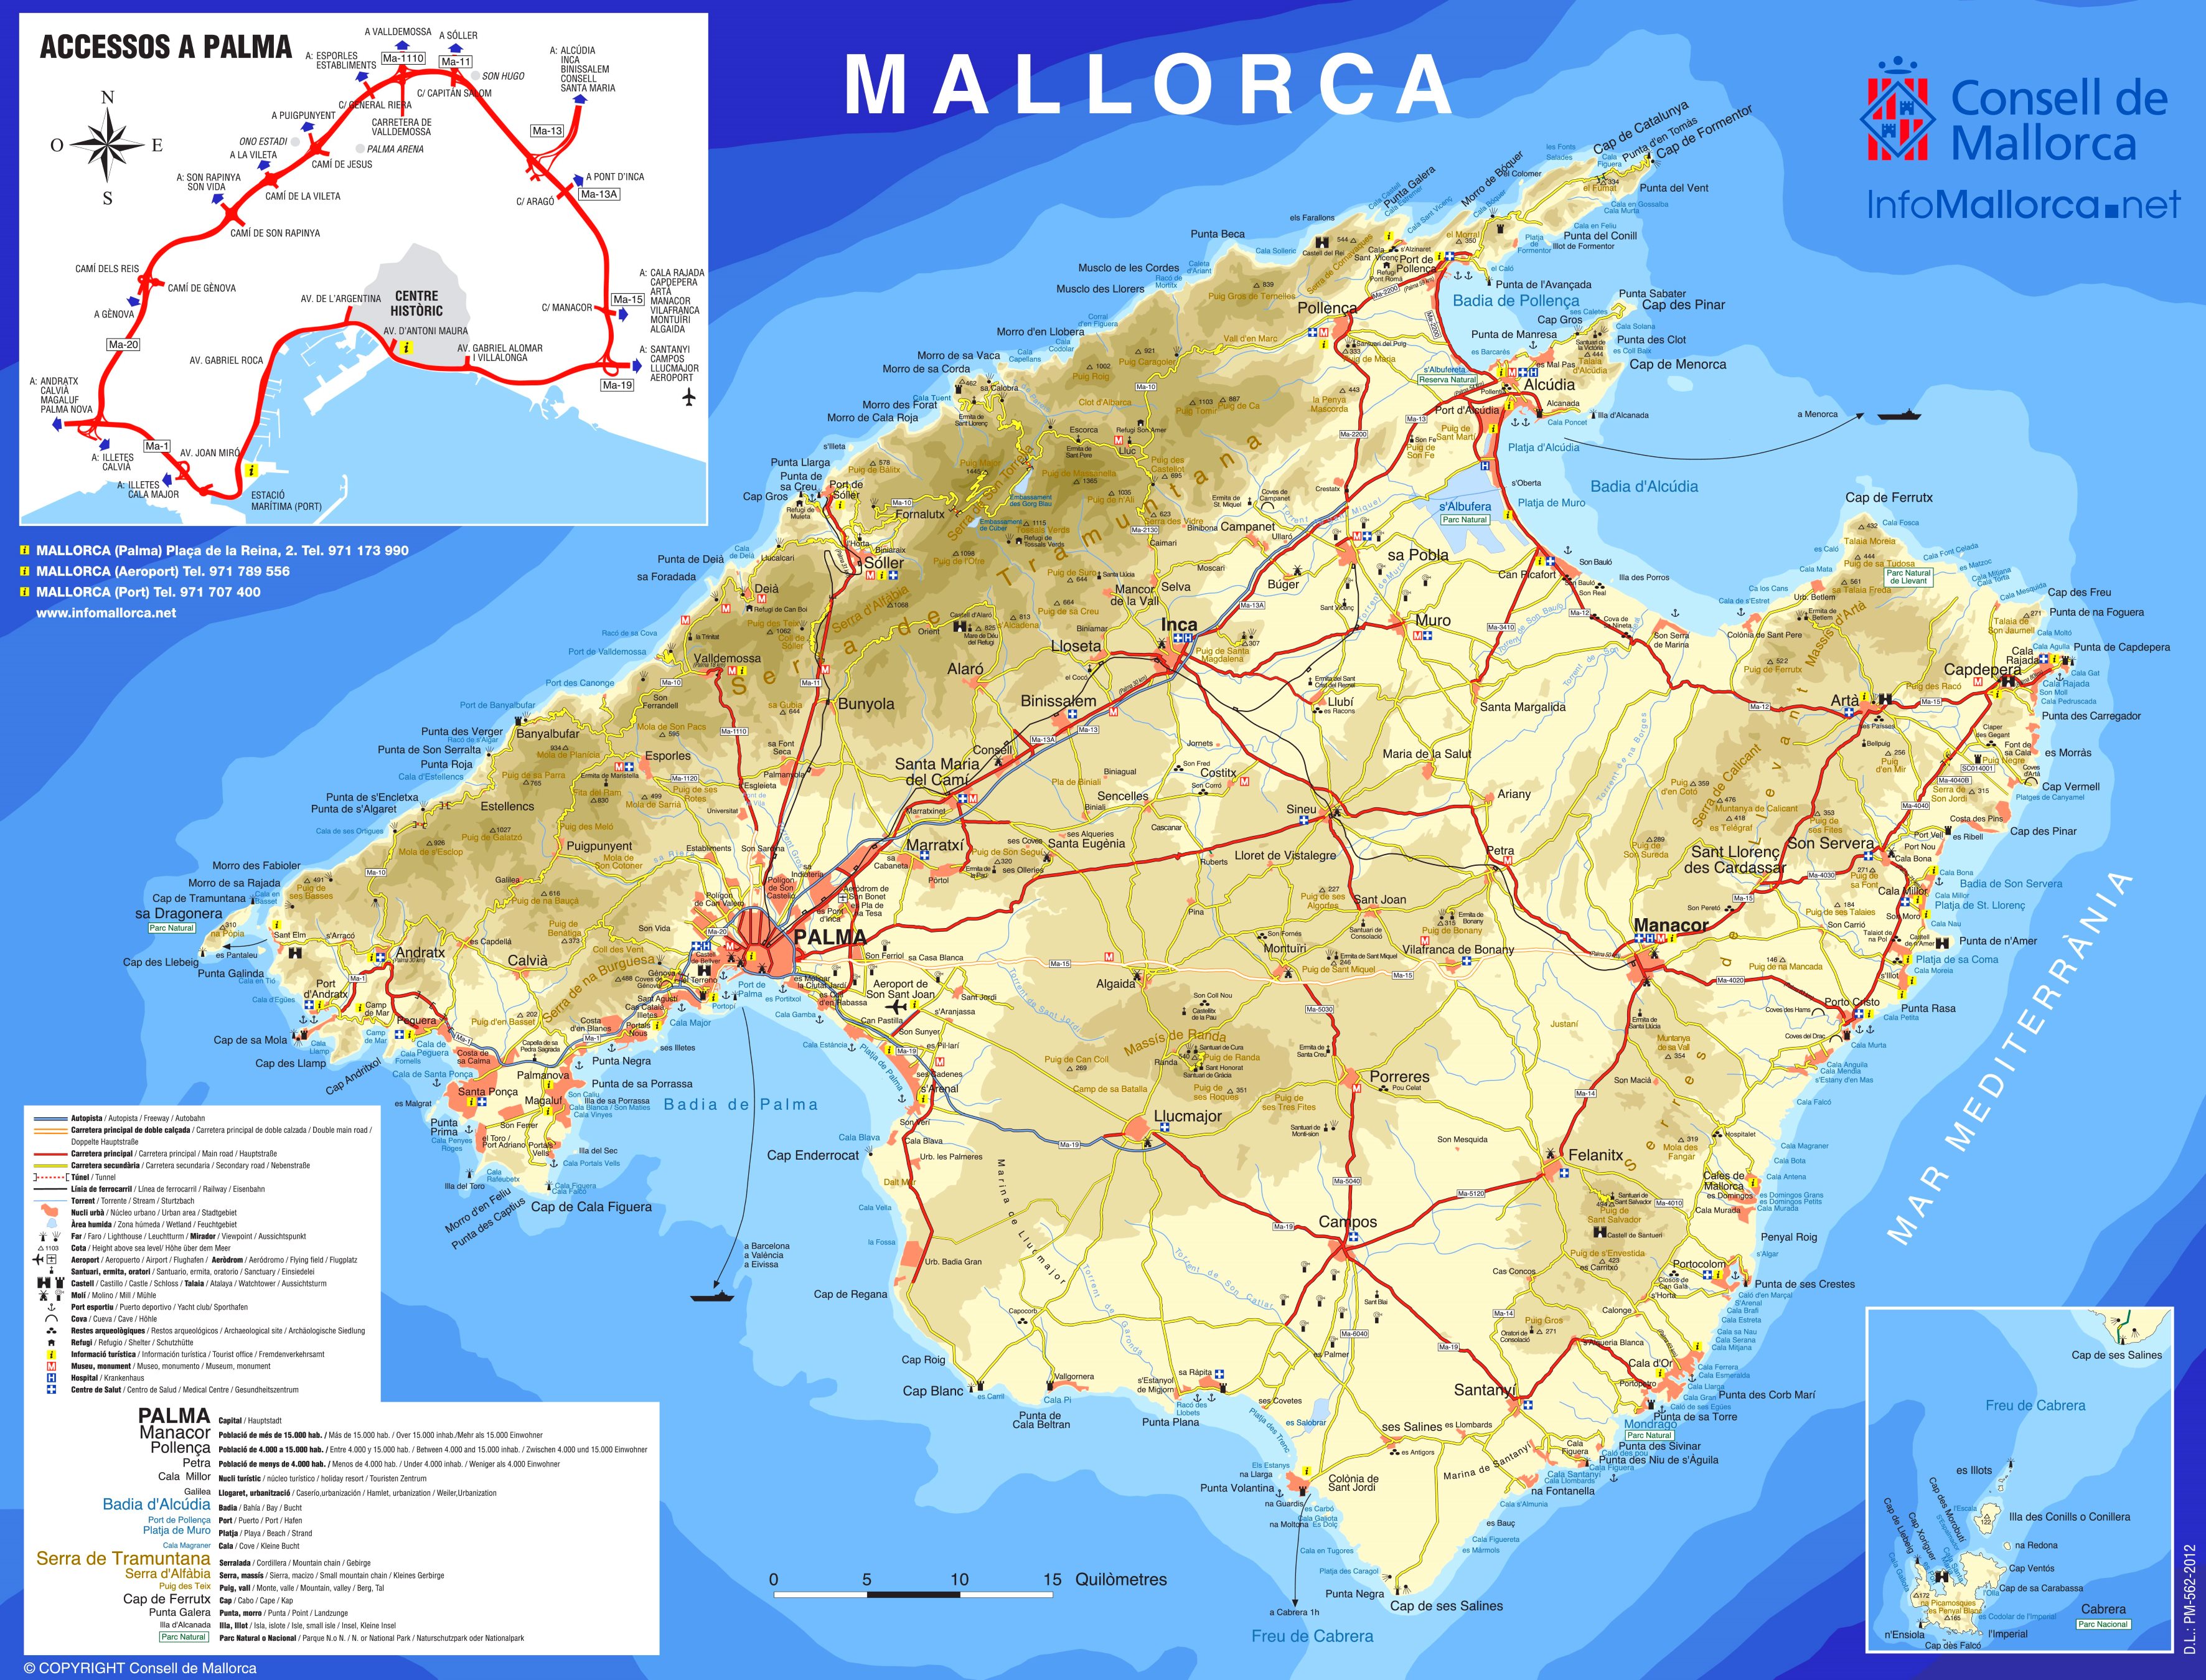 tourist map of majorca island